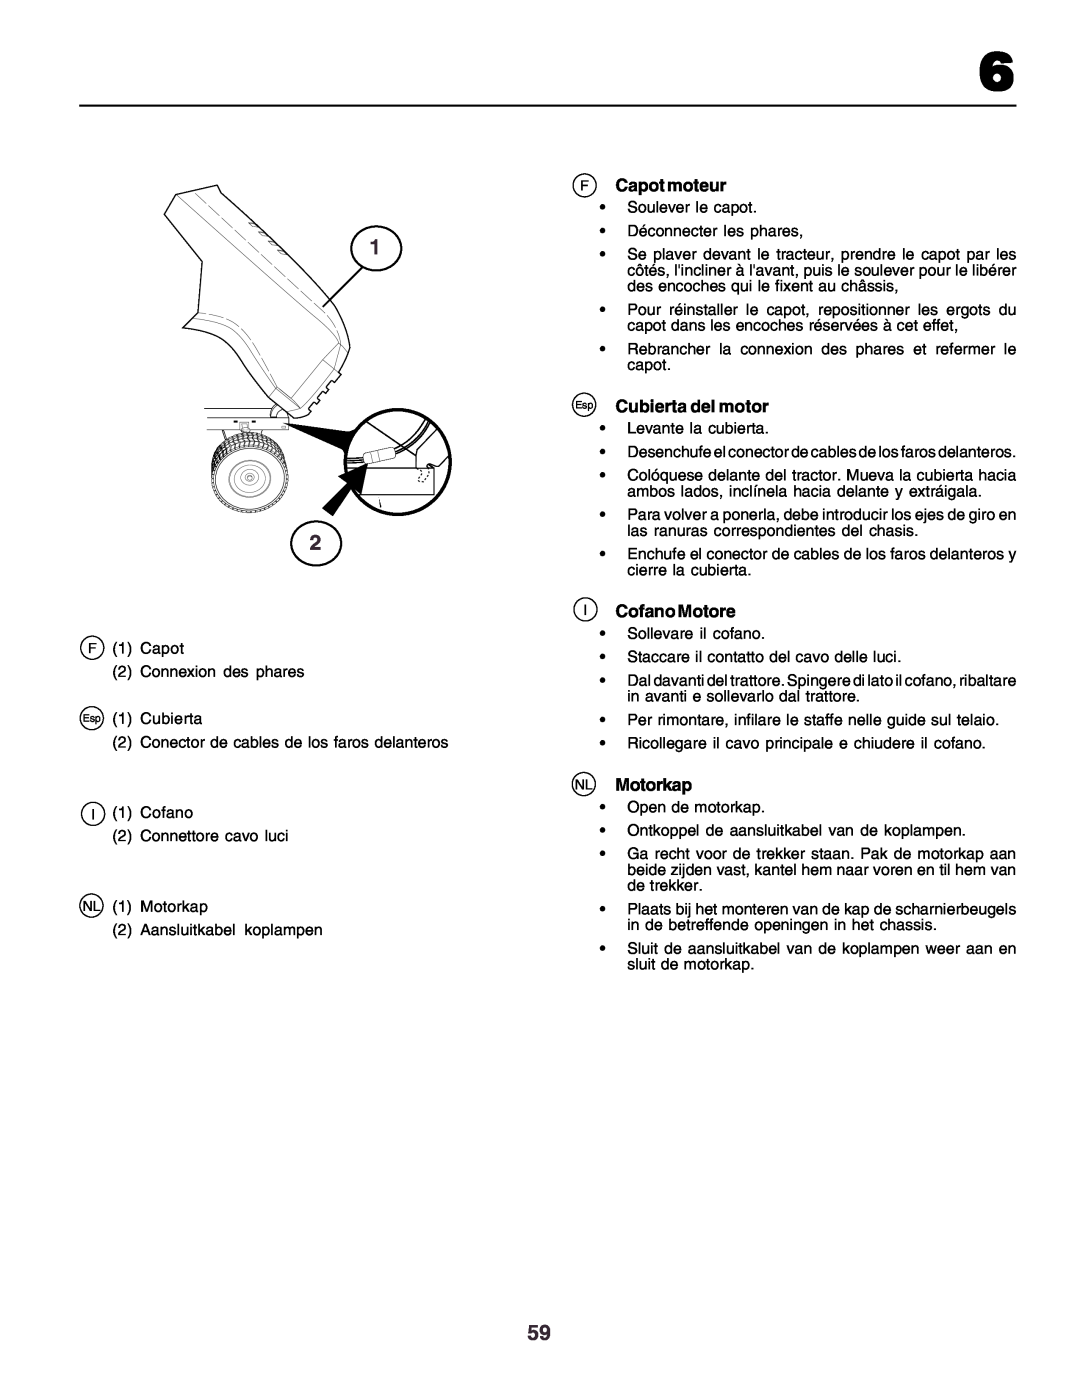 Husqvarna CT130 instruction manual F Capot moteur, Esp Cubierta del motor, Cofano Motore, NL Motorkap 